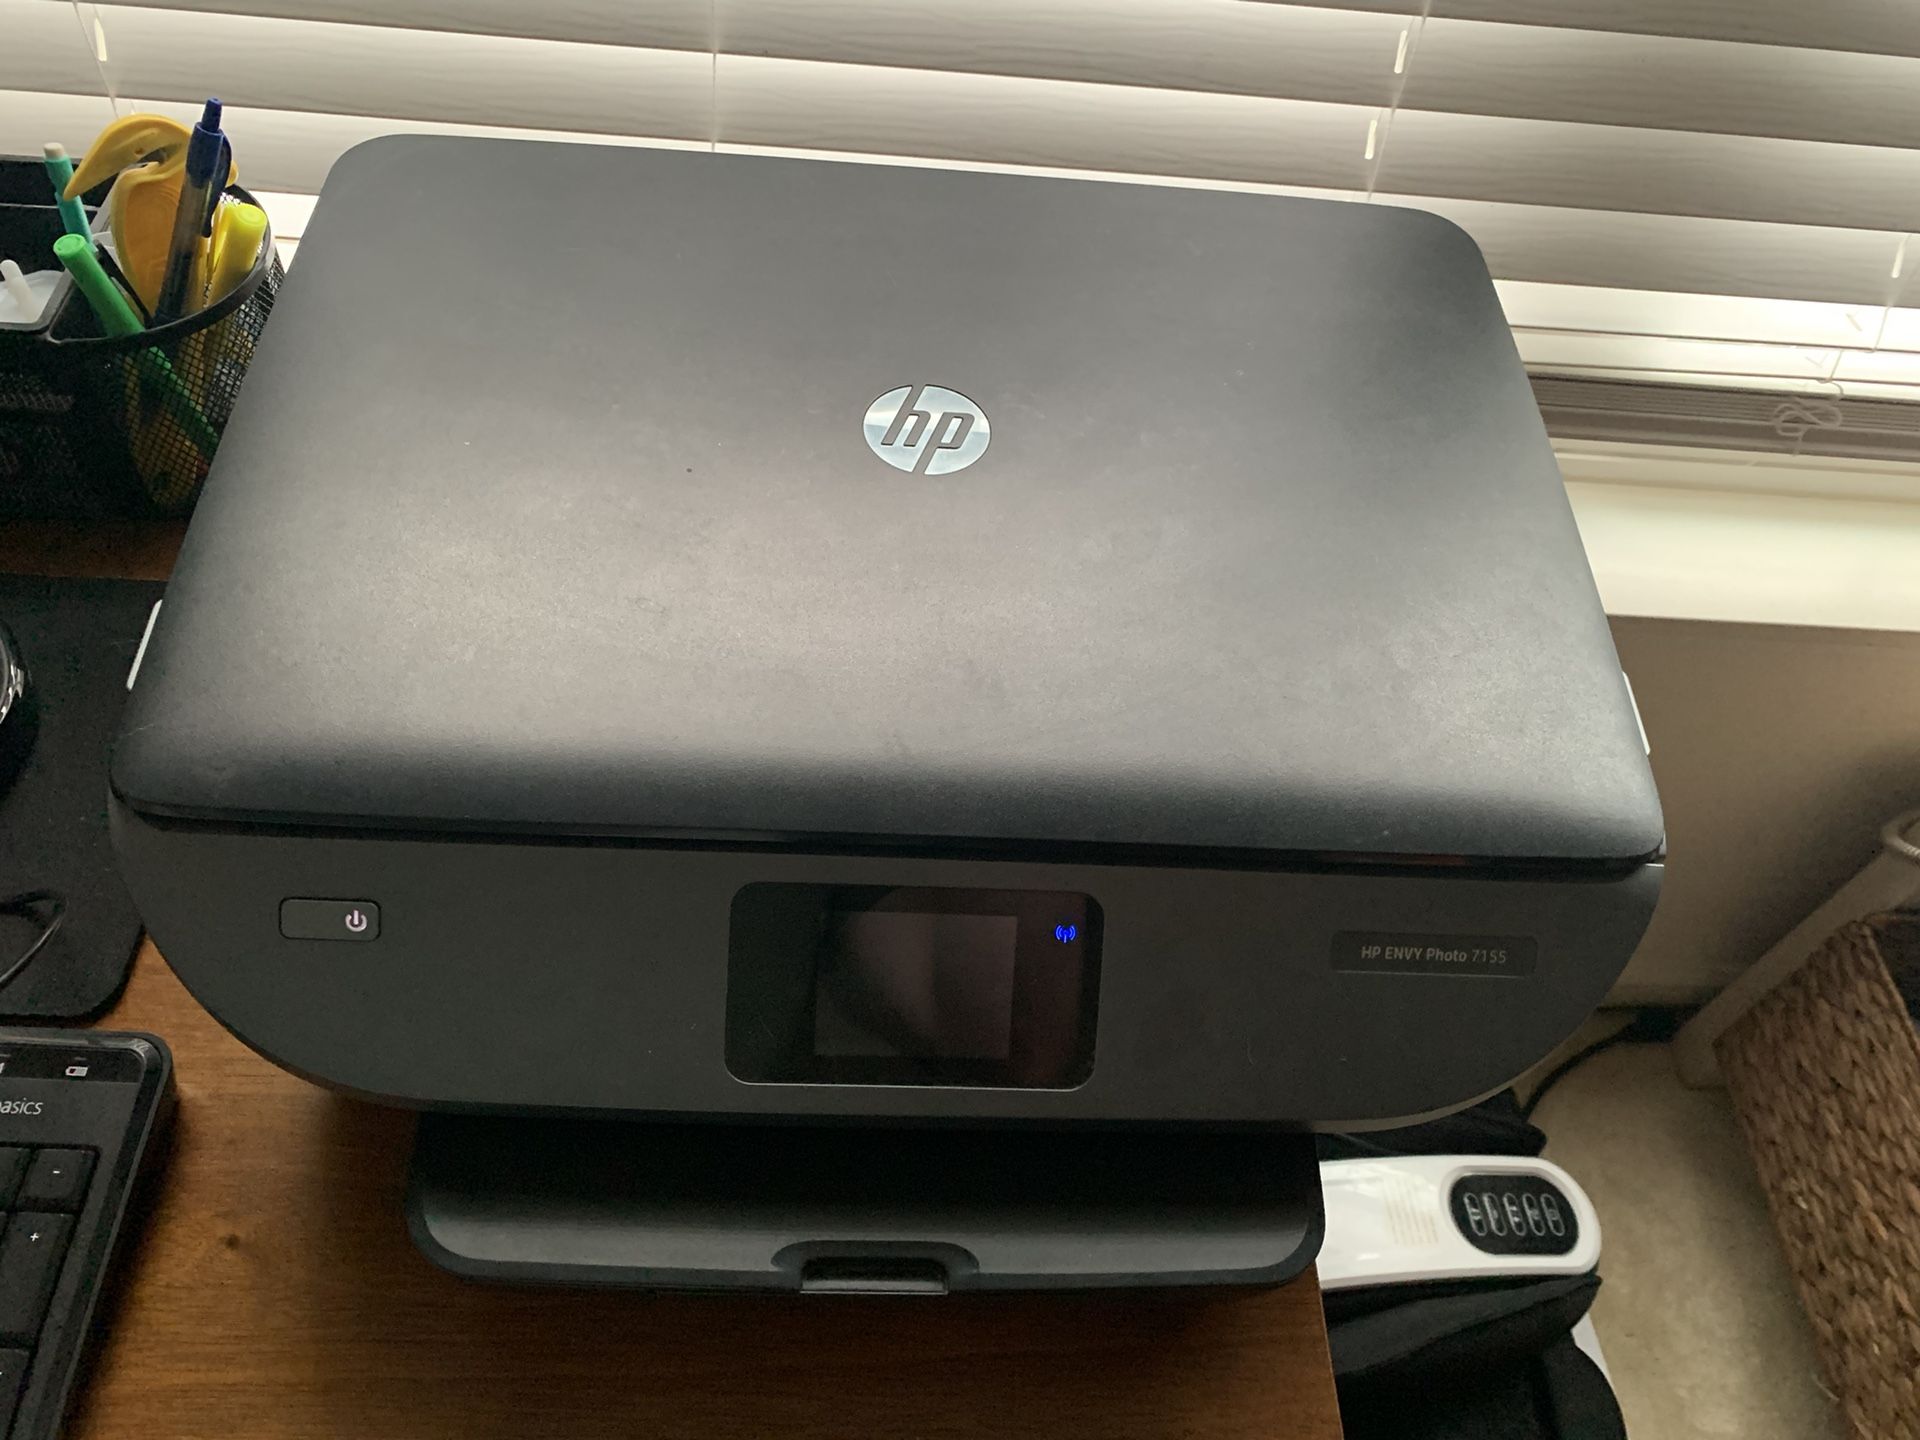 HP 7155 Envy Printer